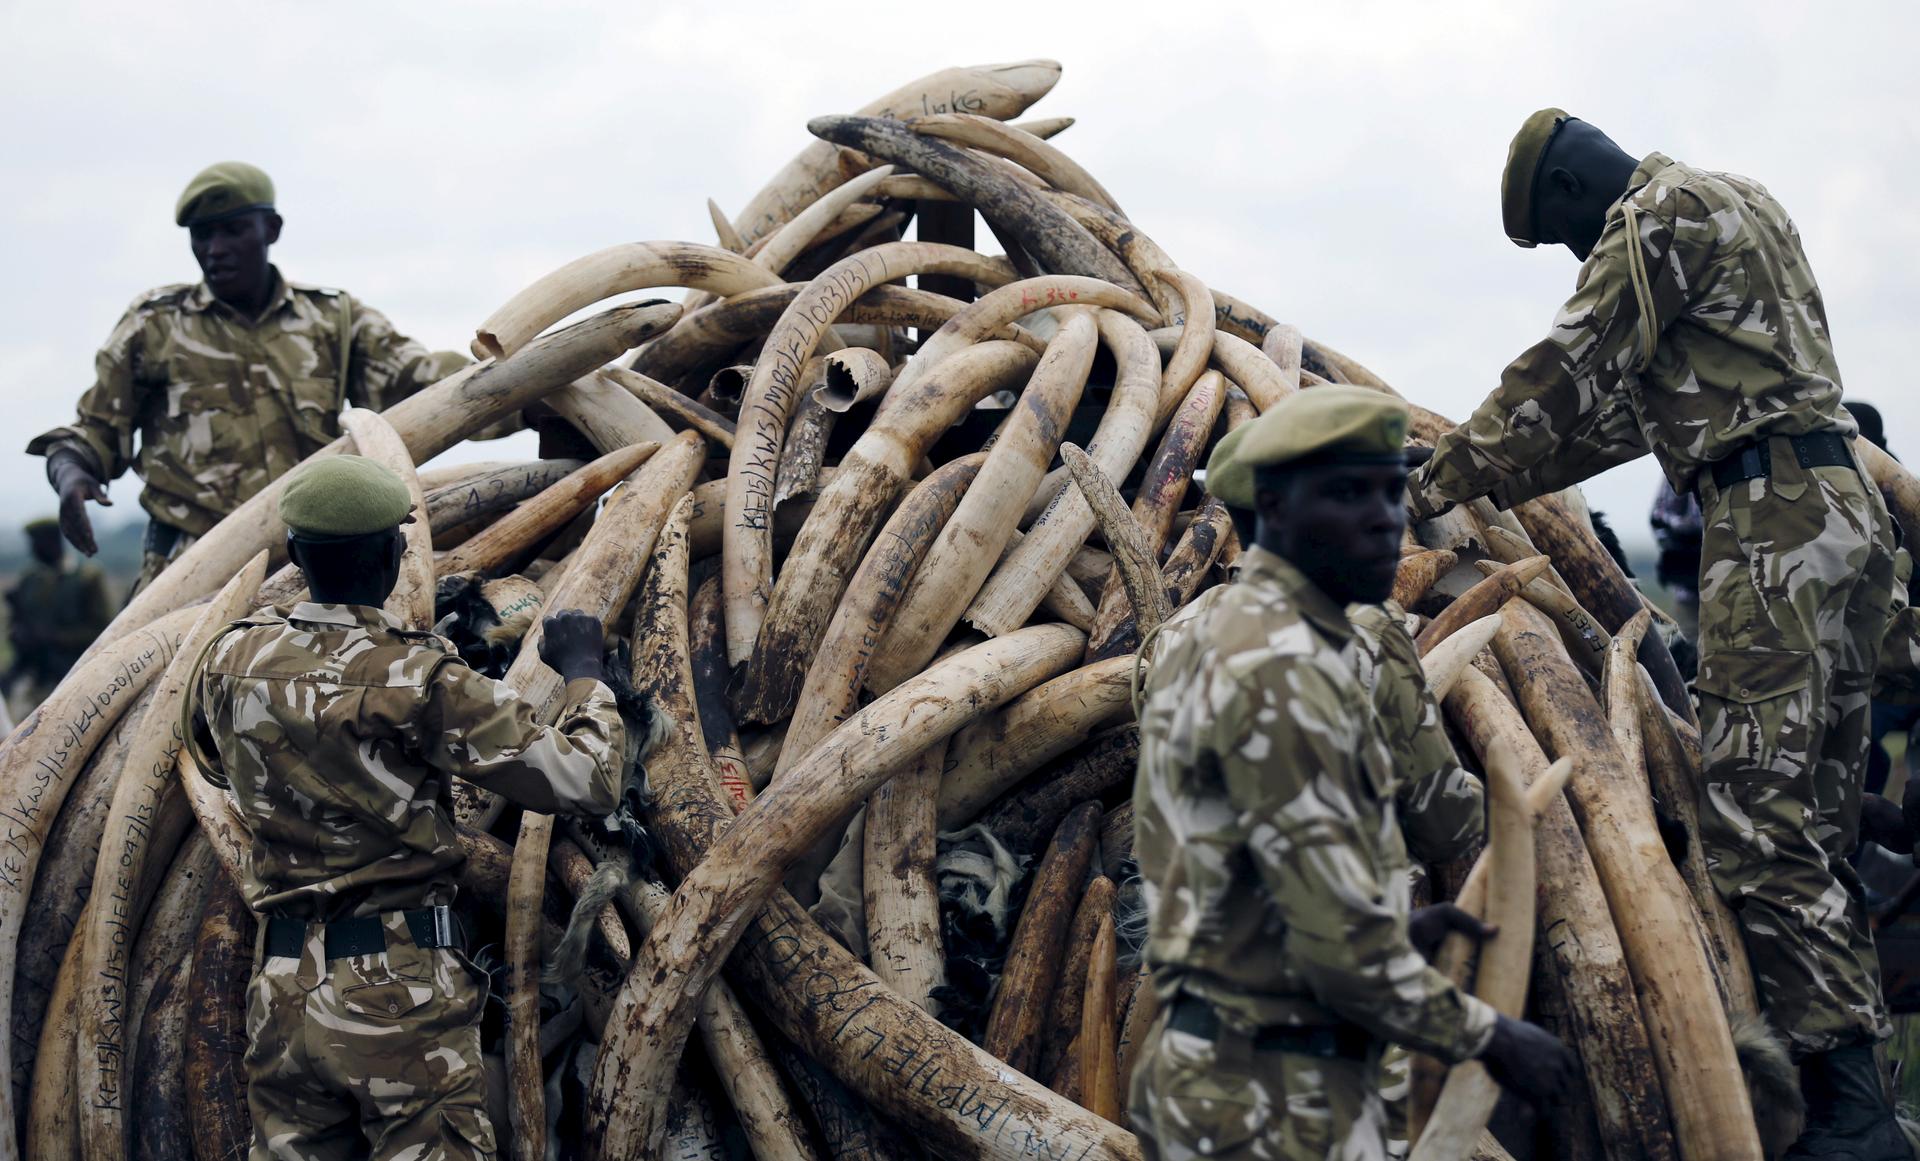 Kenya Wildlife Service rangers stack elephant tusks, part of an estimated 105 tonnes of confiscated ivory to be set ablaze, on a pyre at Nairobi National Park near Nairobi, Kenya, April 20, 2016.